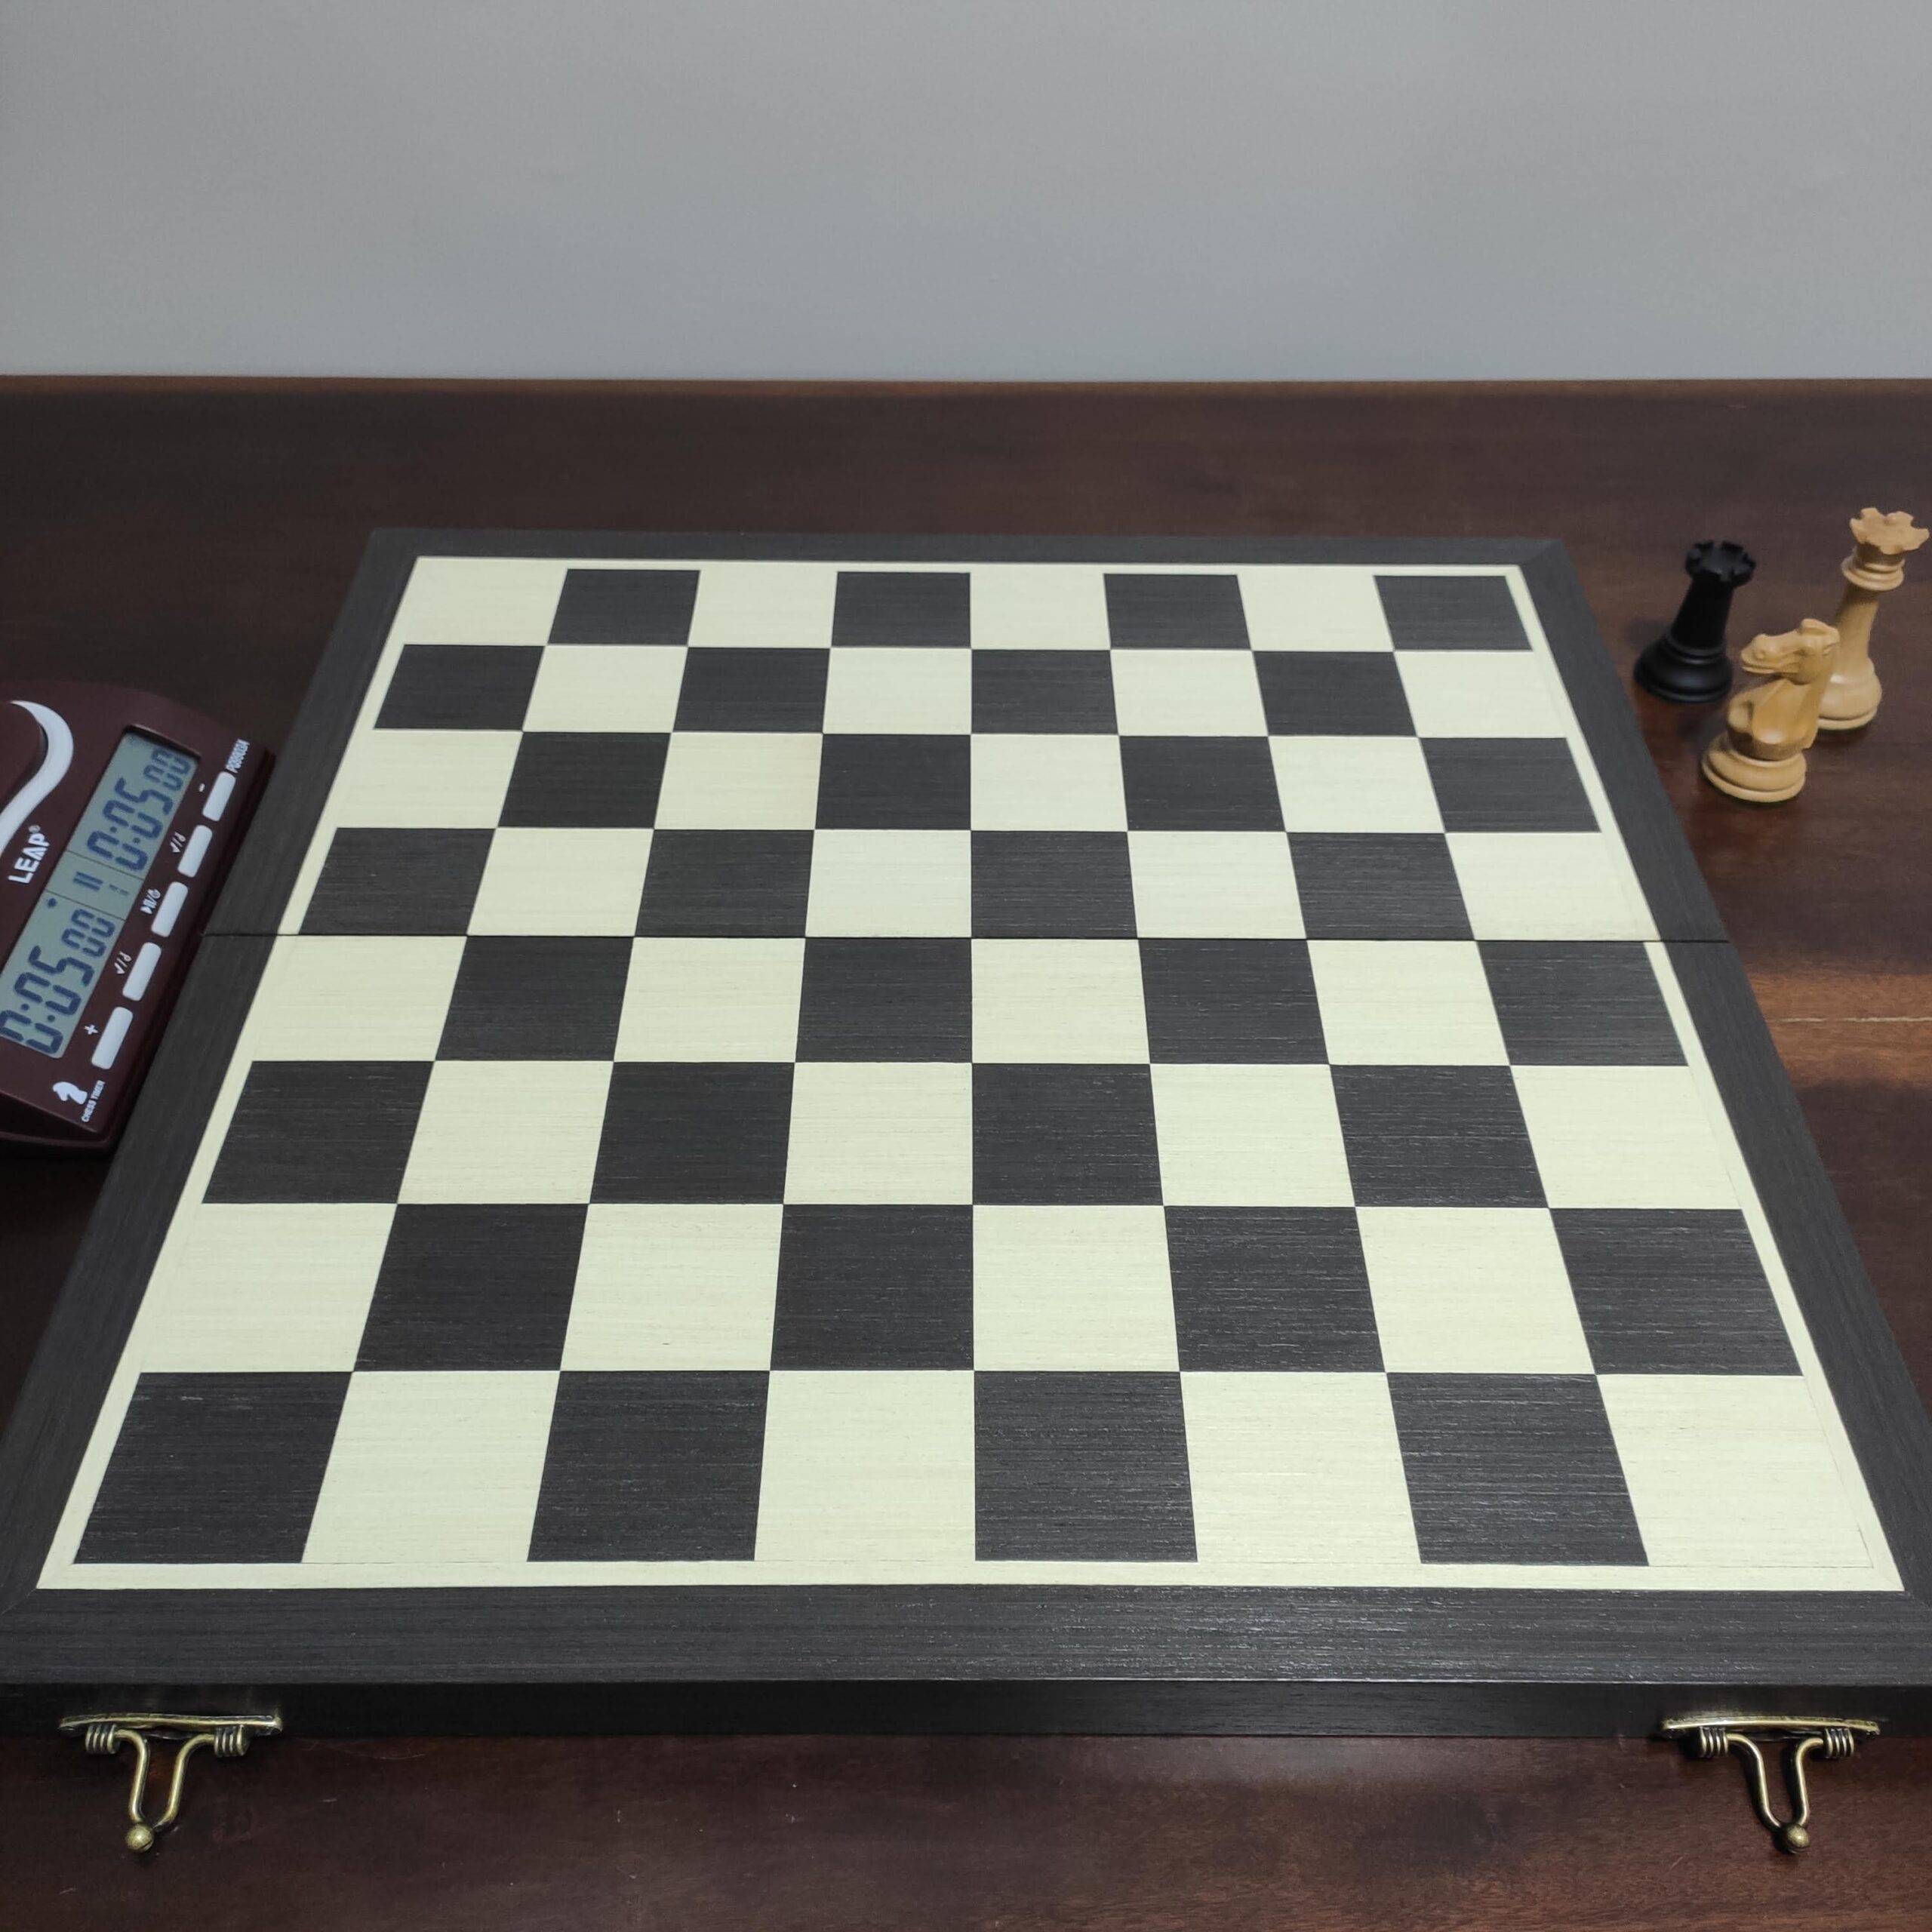 Relógio de Xadrez Digital Leap Premium - A lojinha de xadrez que